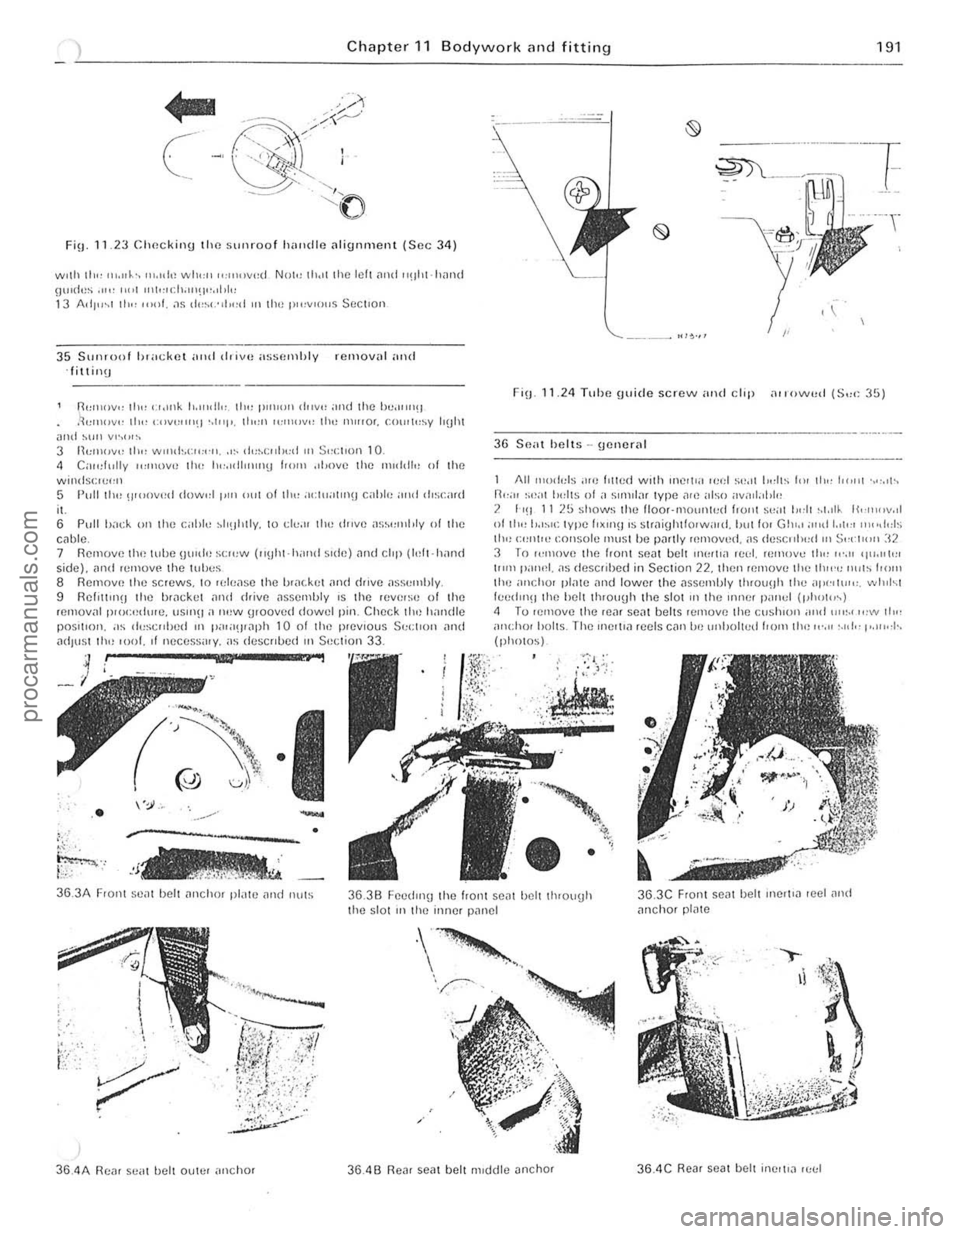 FORD CAPRI 1974  Workshop Manual ) Chapter 11 Bodywork ar\d fitting 191 
.. 
C 
FilJ.  11.23 elweki"\) the sunroof hHndle nlignment (Sec 3 4 ) 
wllh th" ",.IIk-,  " •• "I,~ whO:1l "",,",vt:d NOh! th.,t tile lelt ,lnd "oht·h1